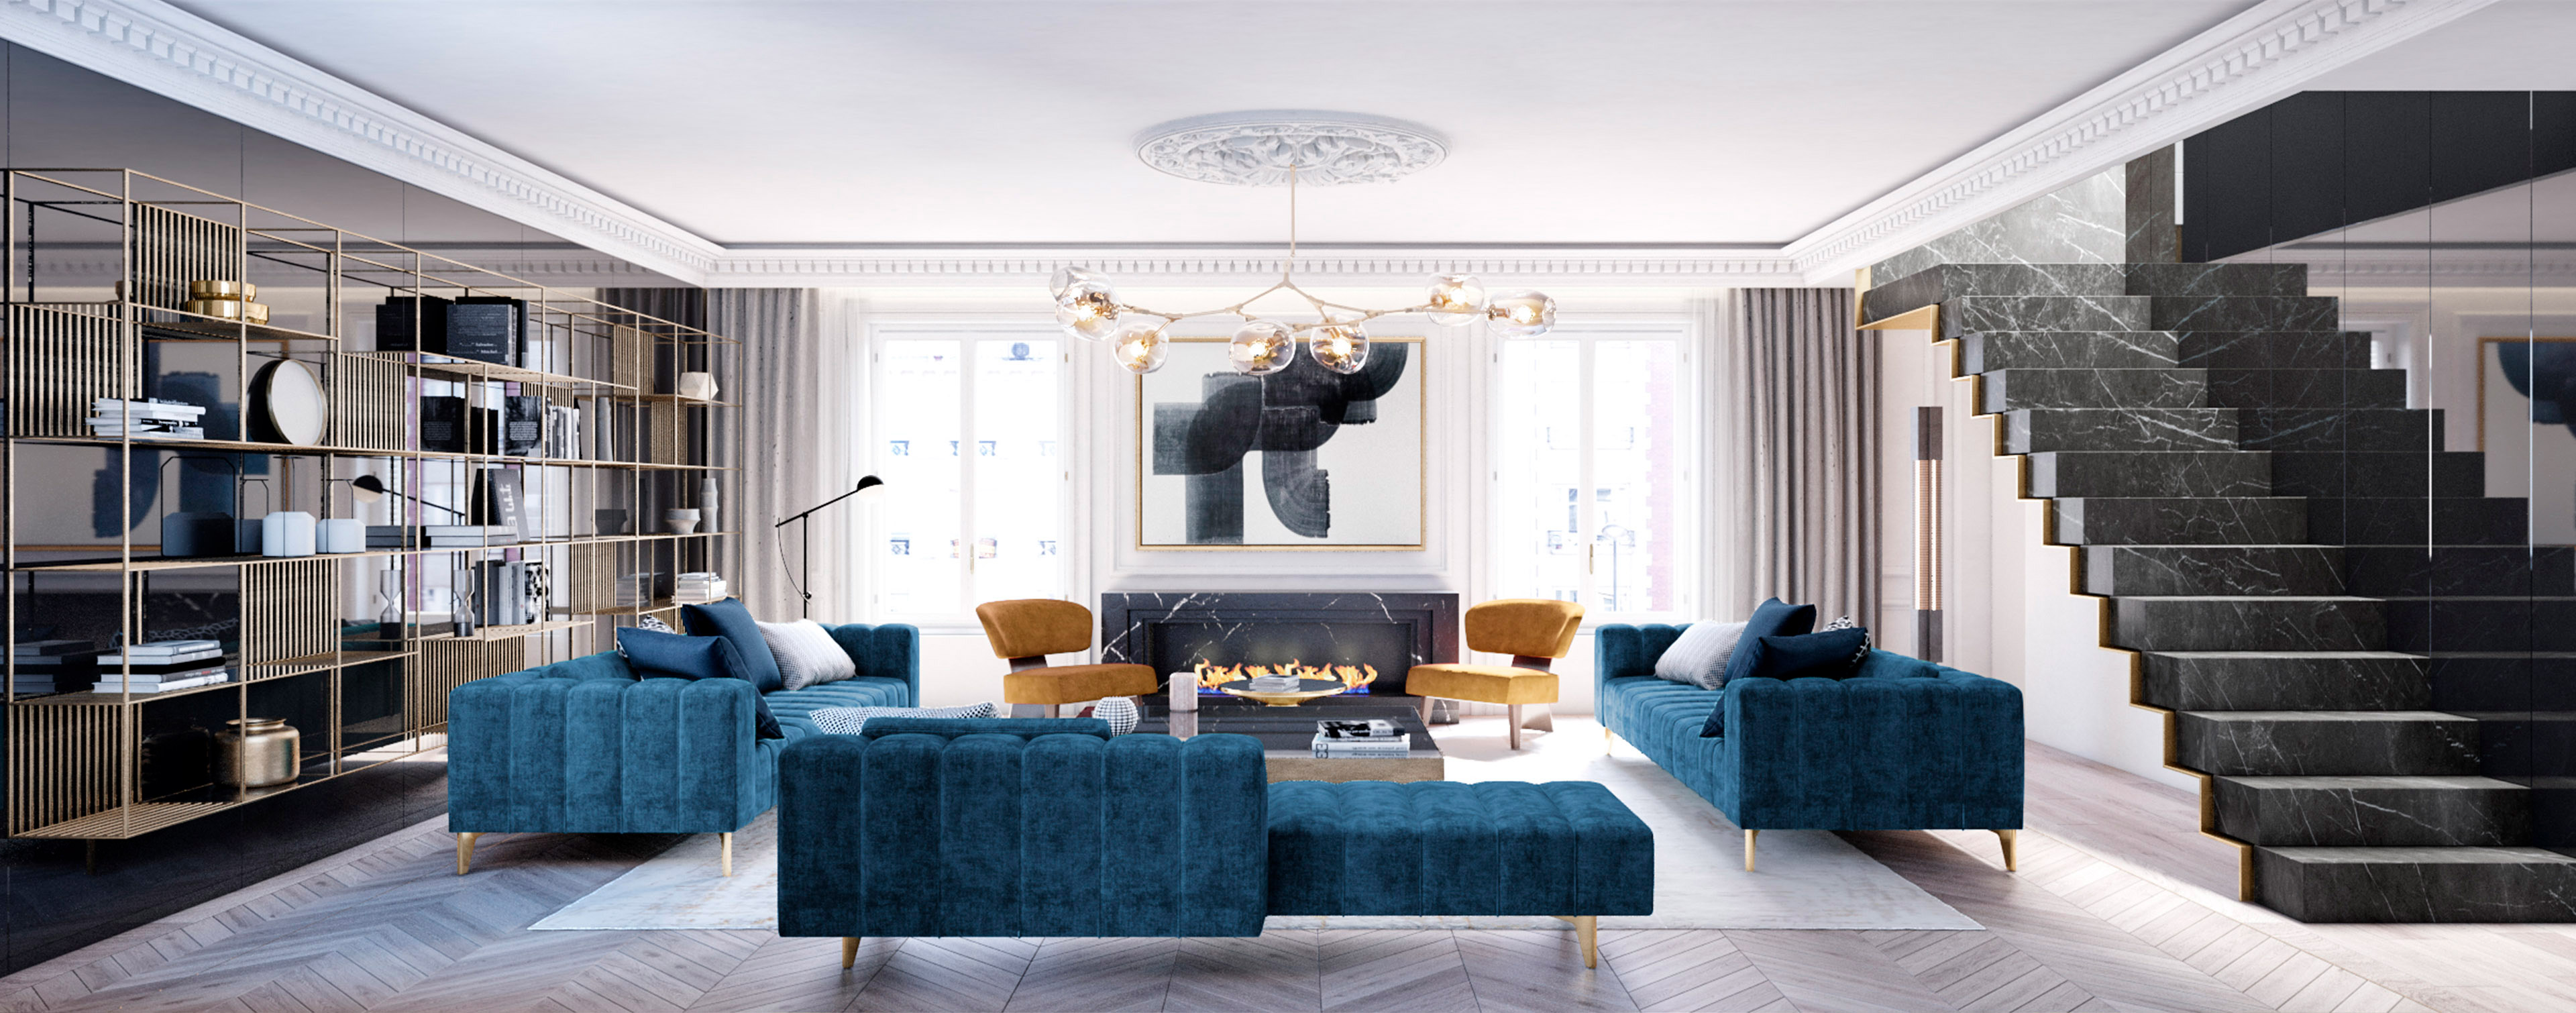 luv studio luxury architects paris saint germain penthouse apartment IMG 01 1 - LUV Studio - Architecture & Design - Barcelona